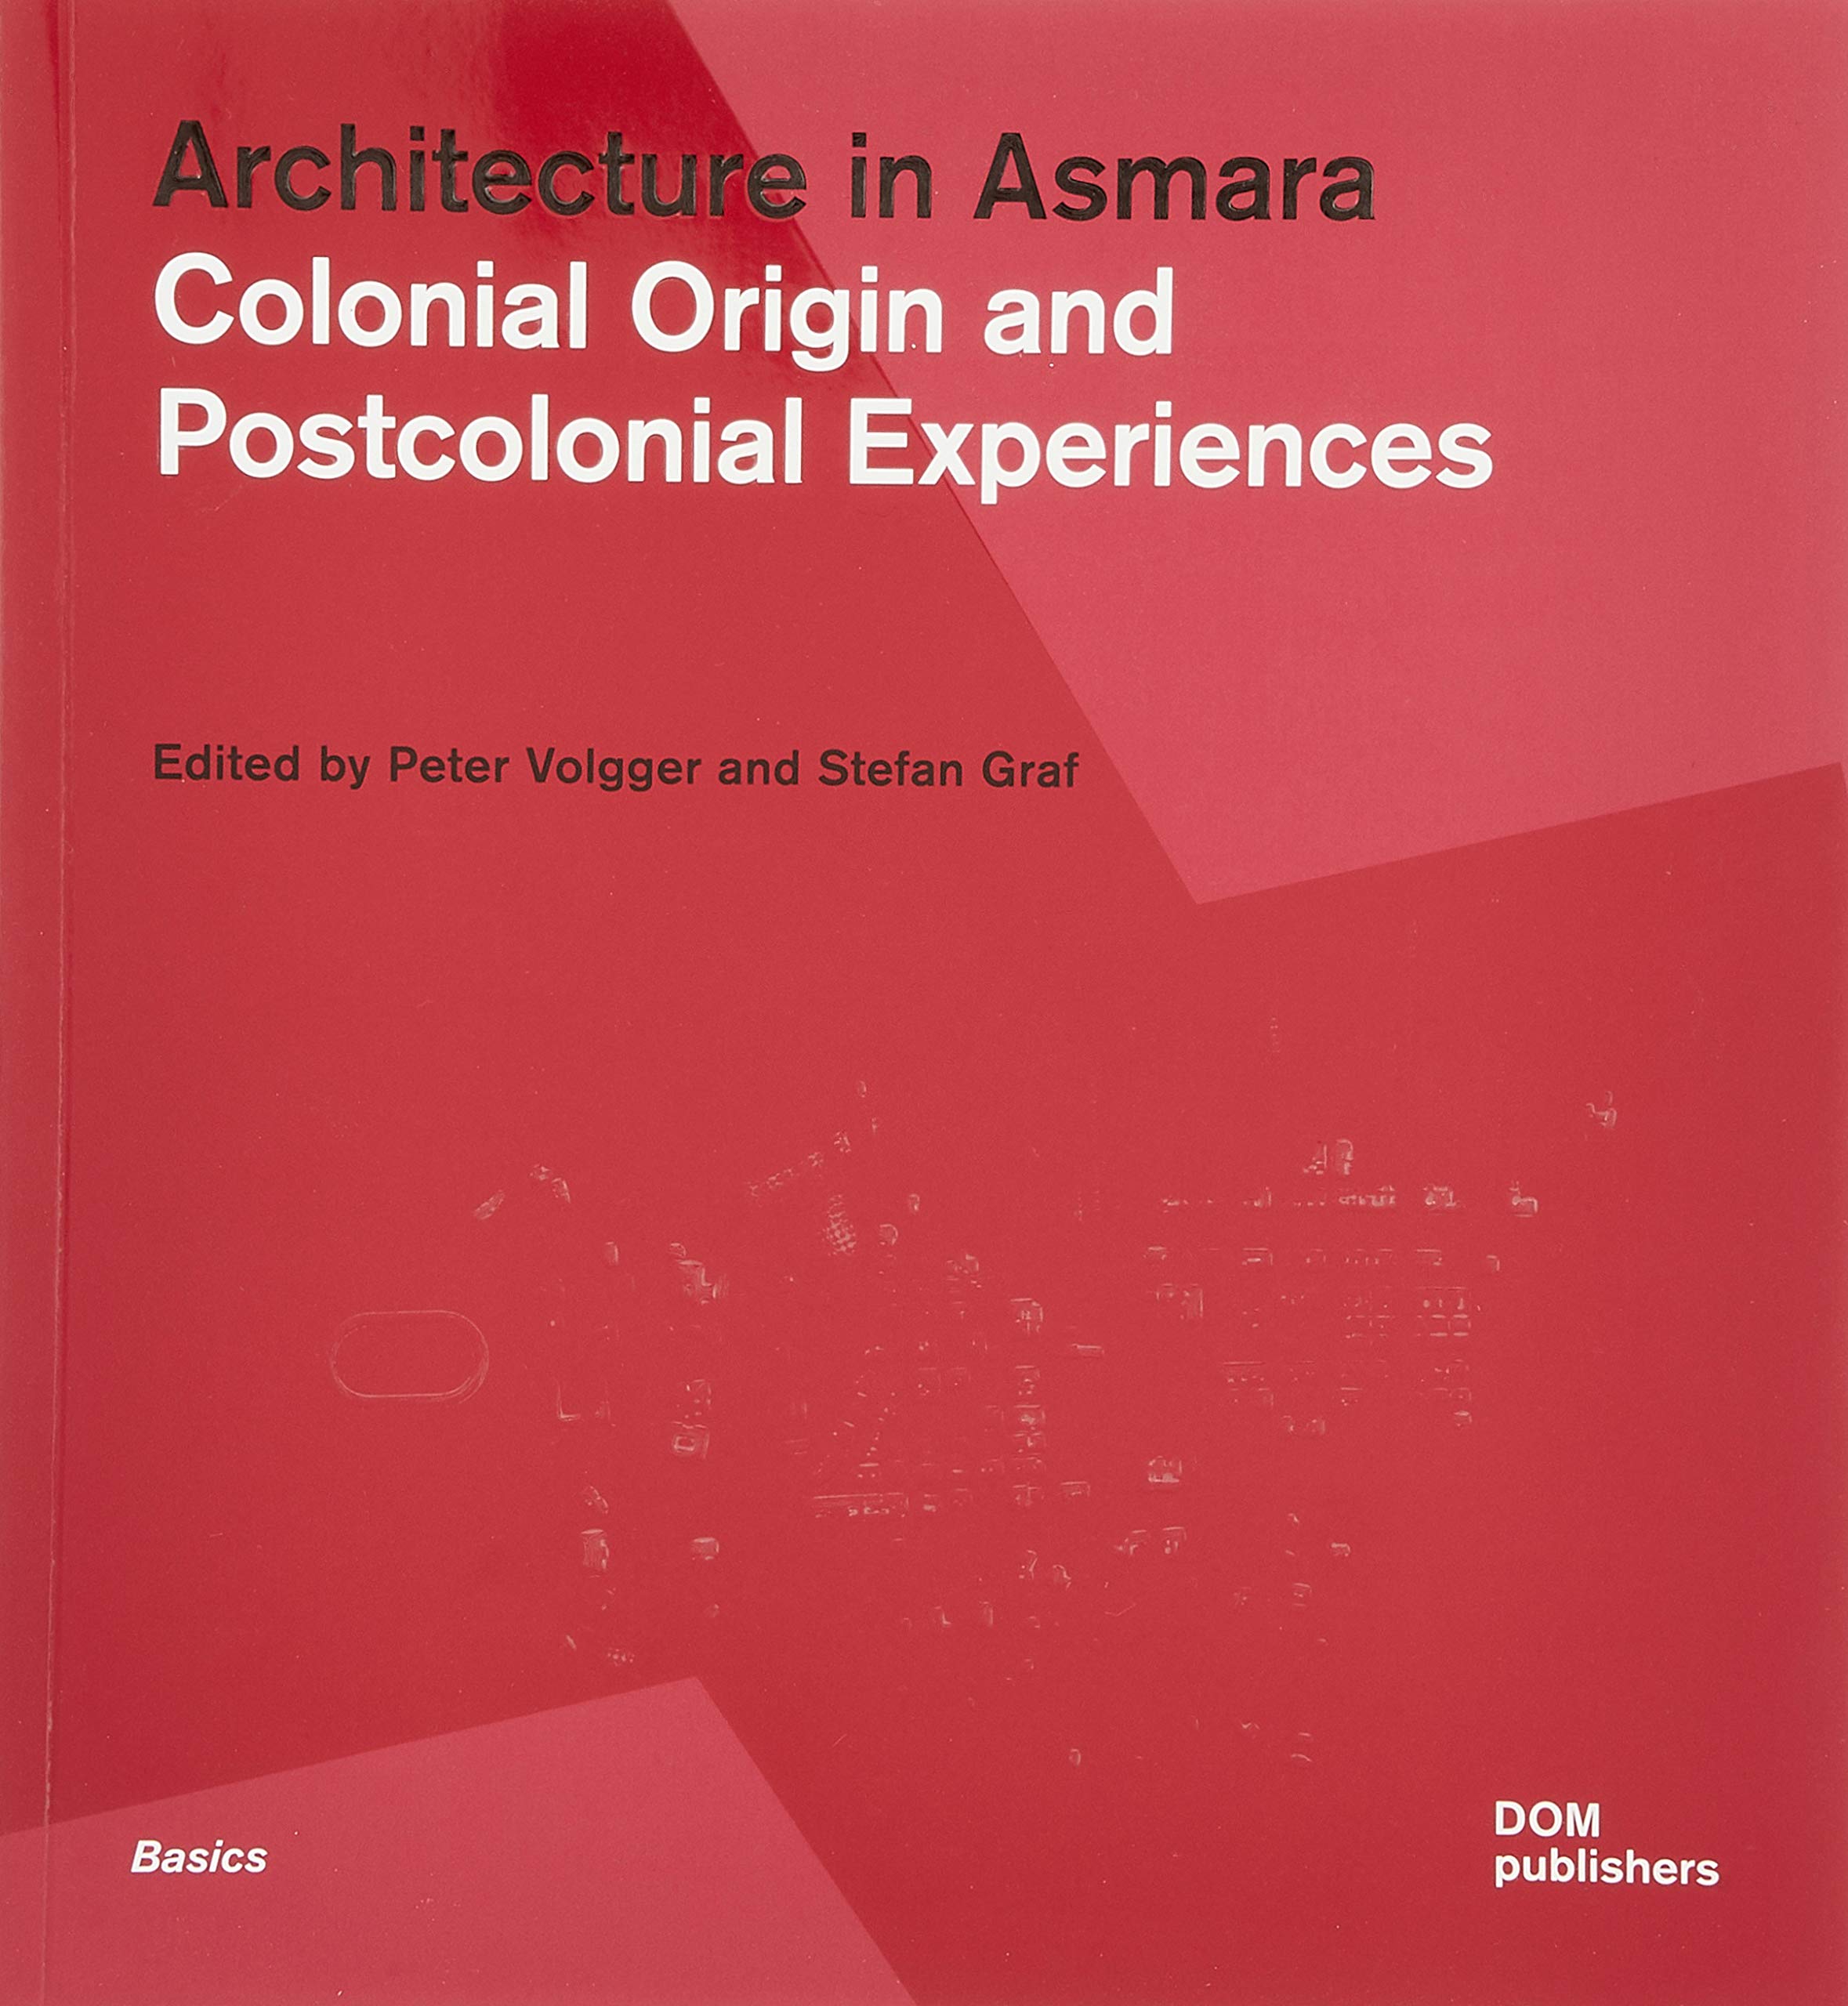 Architecture in Asmara: Colonial Origin and Postcolonial Experiences